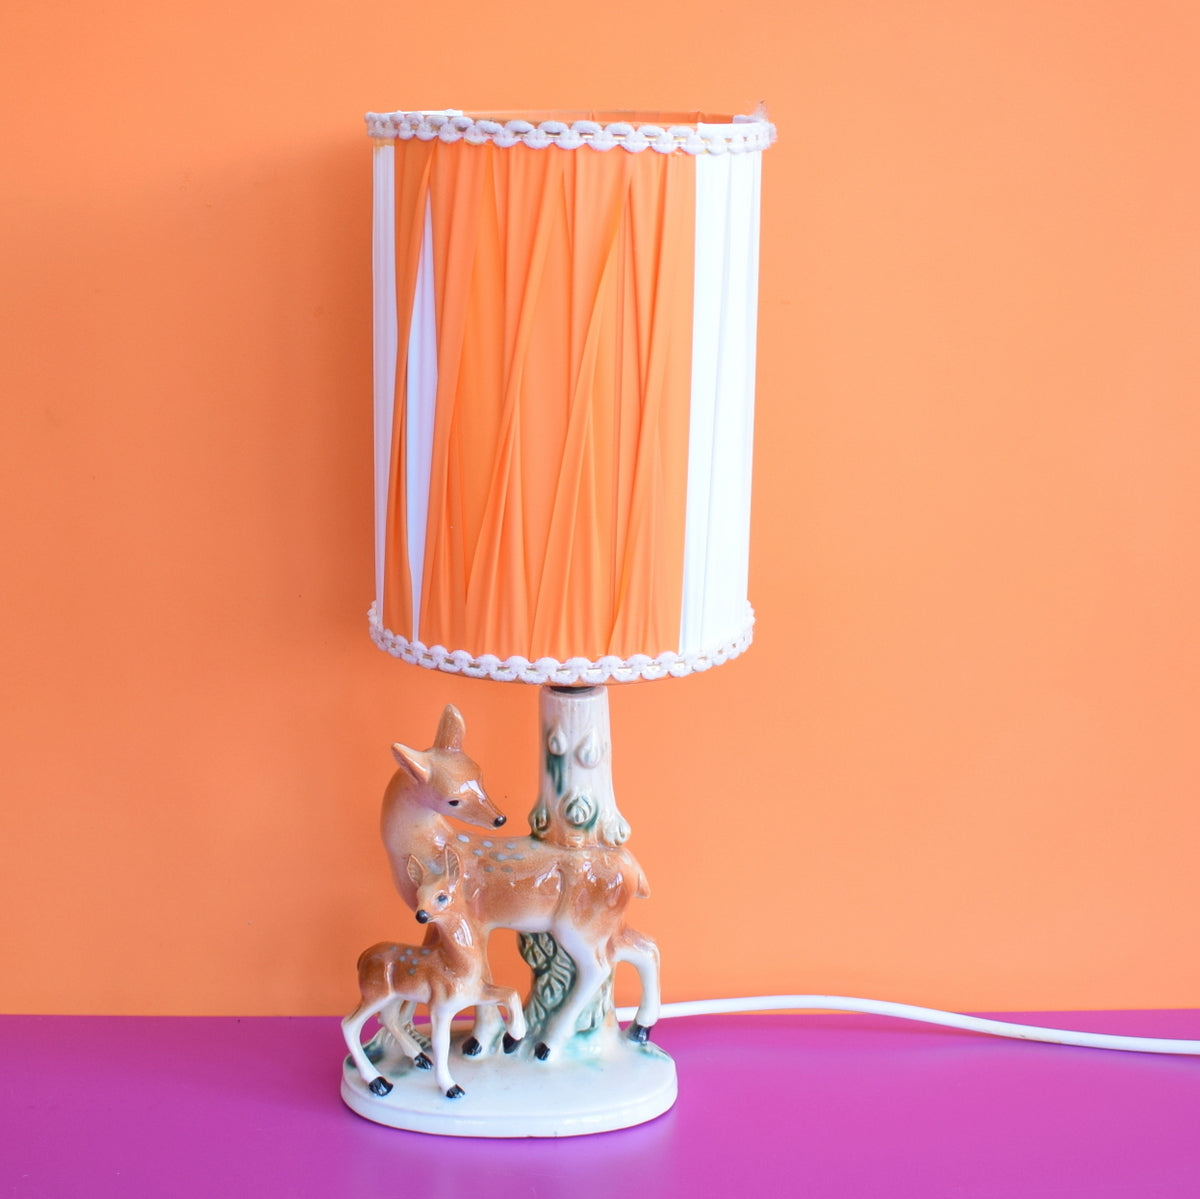 Vintage 1950s Ceramic Deer Lamp & Shade - White & Orange